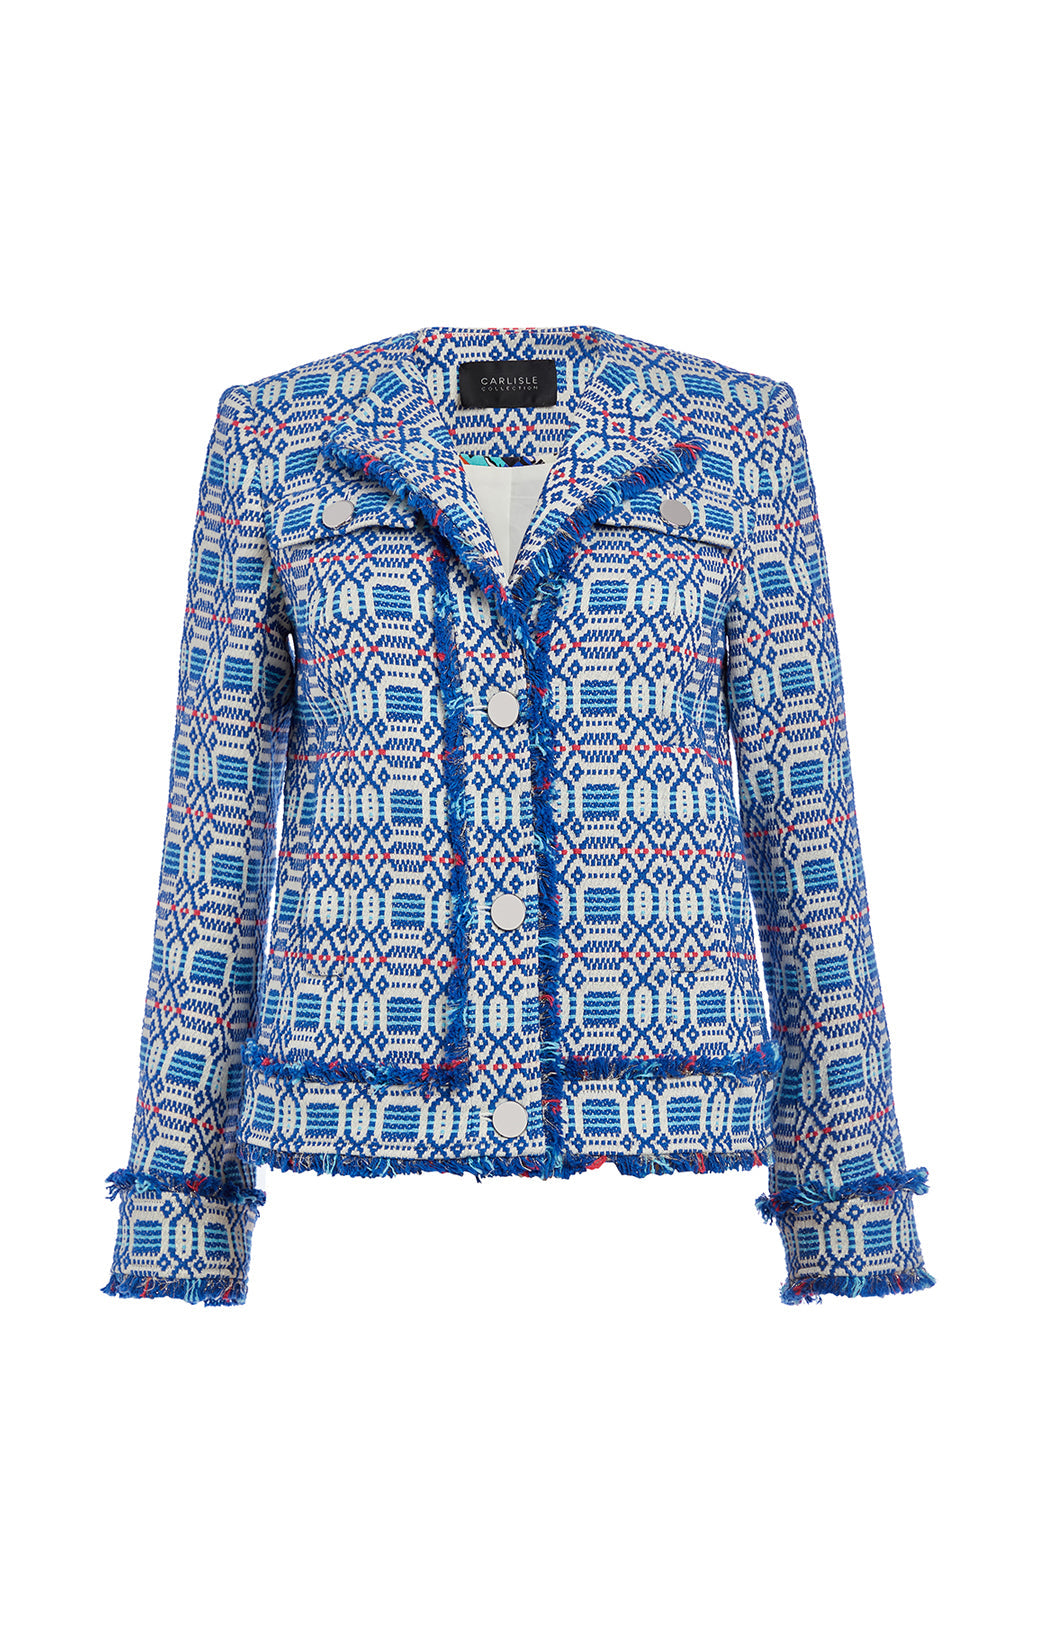 Alcazar - Tile-Printed Sateen Jacket - Product Image